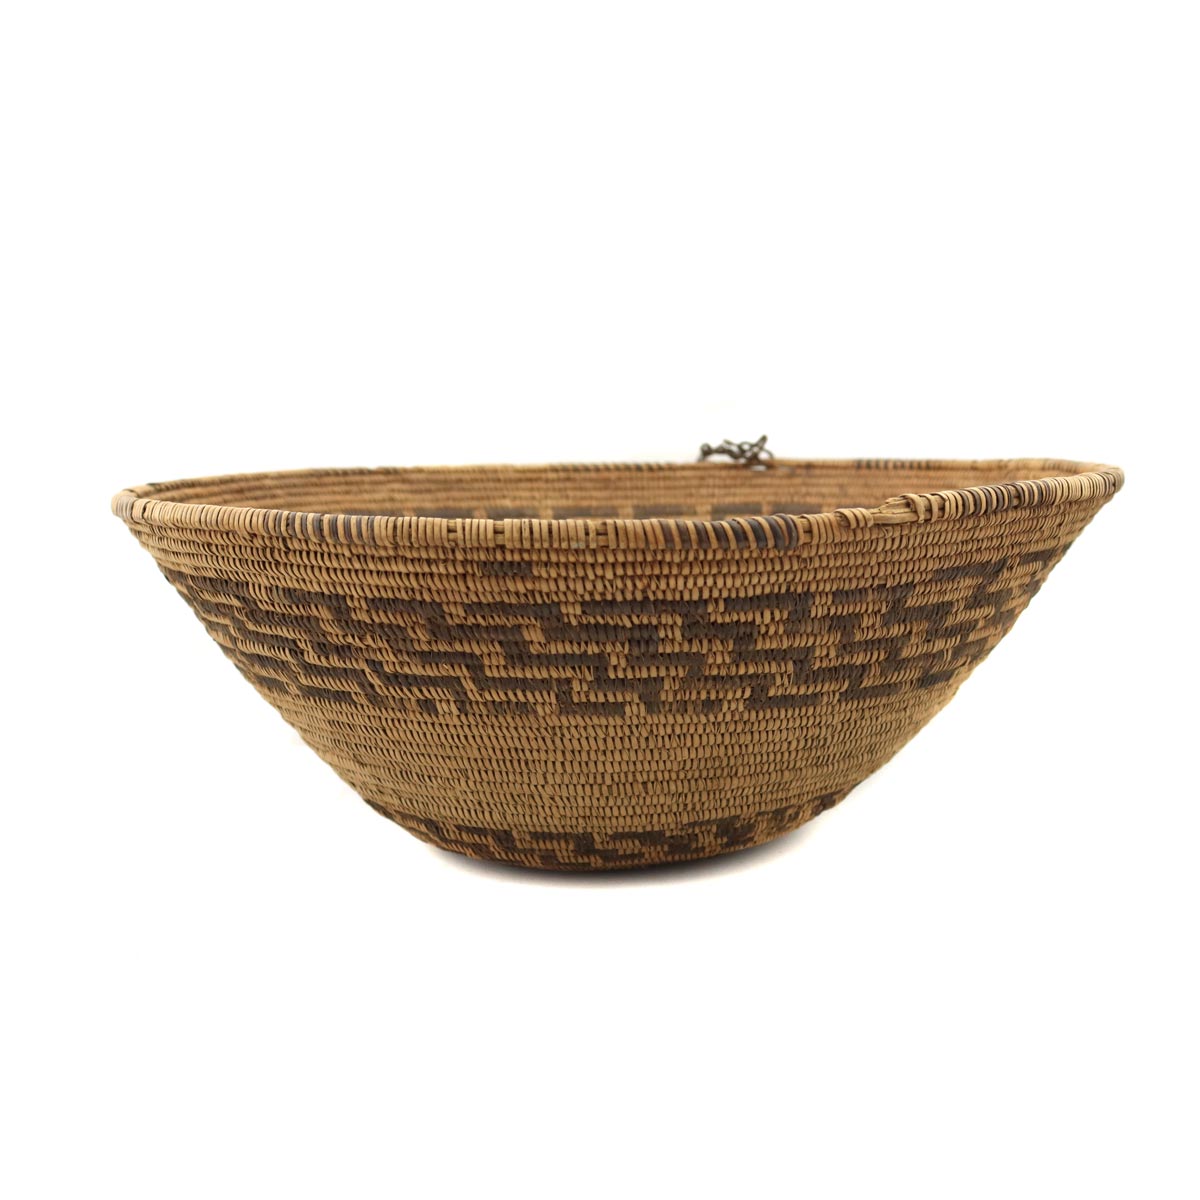 Panamint/Shoshone Basket with Geometric Design c. 1890s, 4" x 11" (SK3207)1